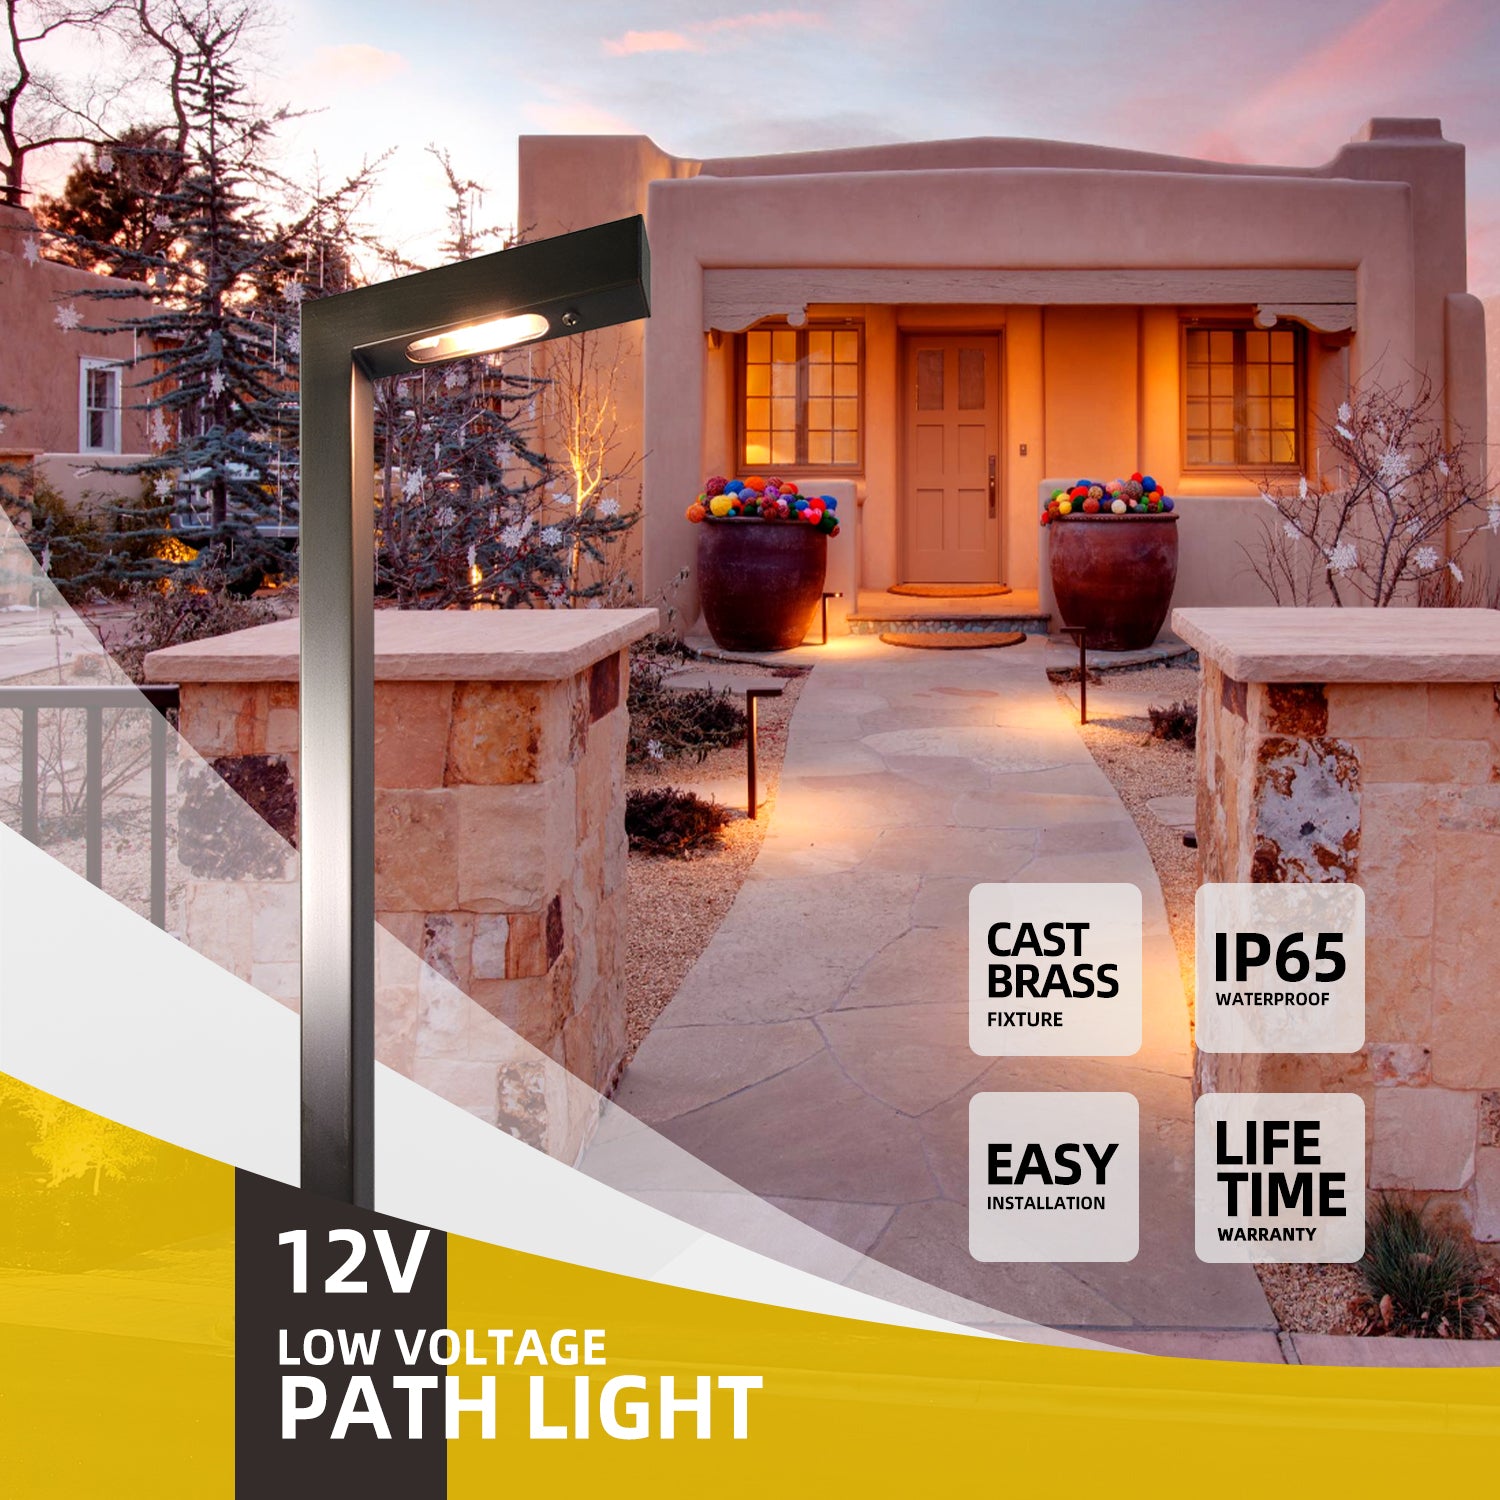 12V low voltage outdoor path light with brass fixture, waterproof IP65, easy installation, lifetime warranty, ideal for garden landscape lighting